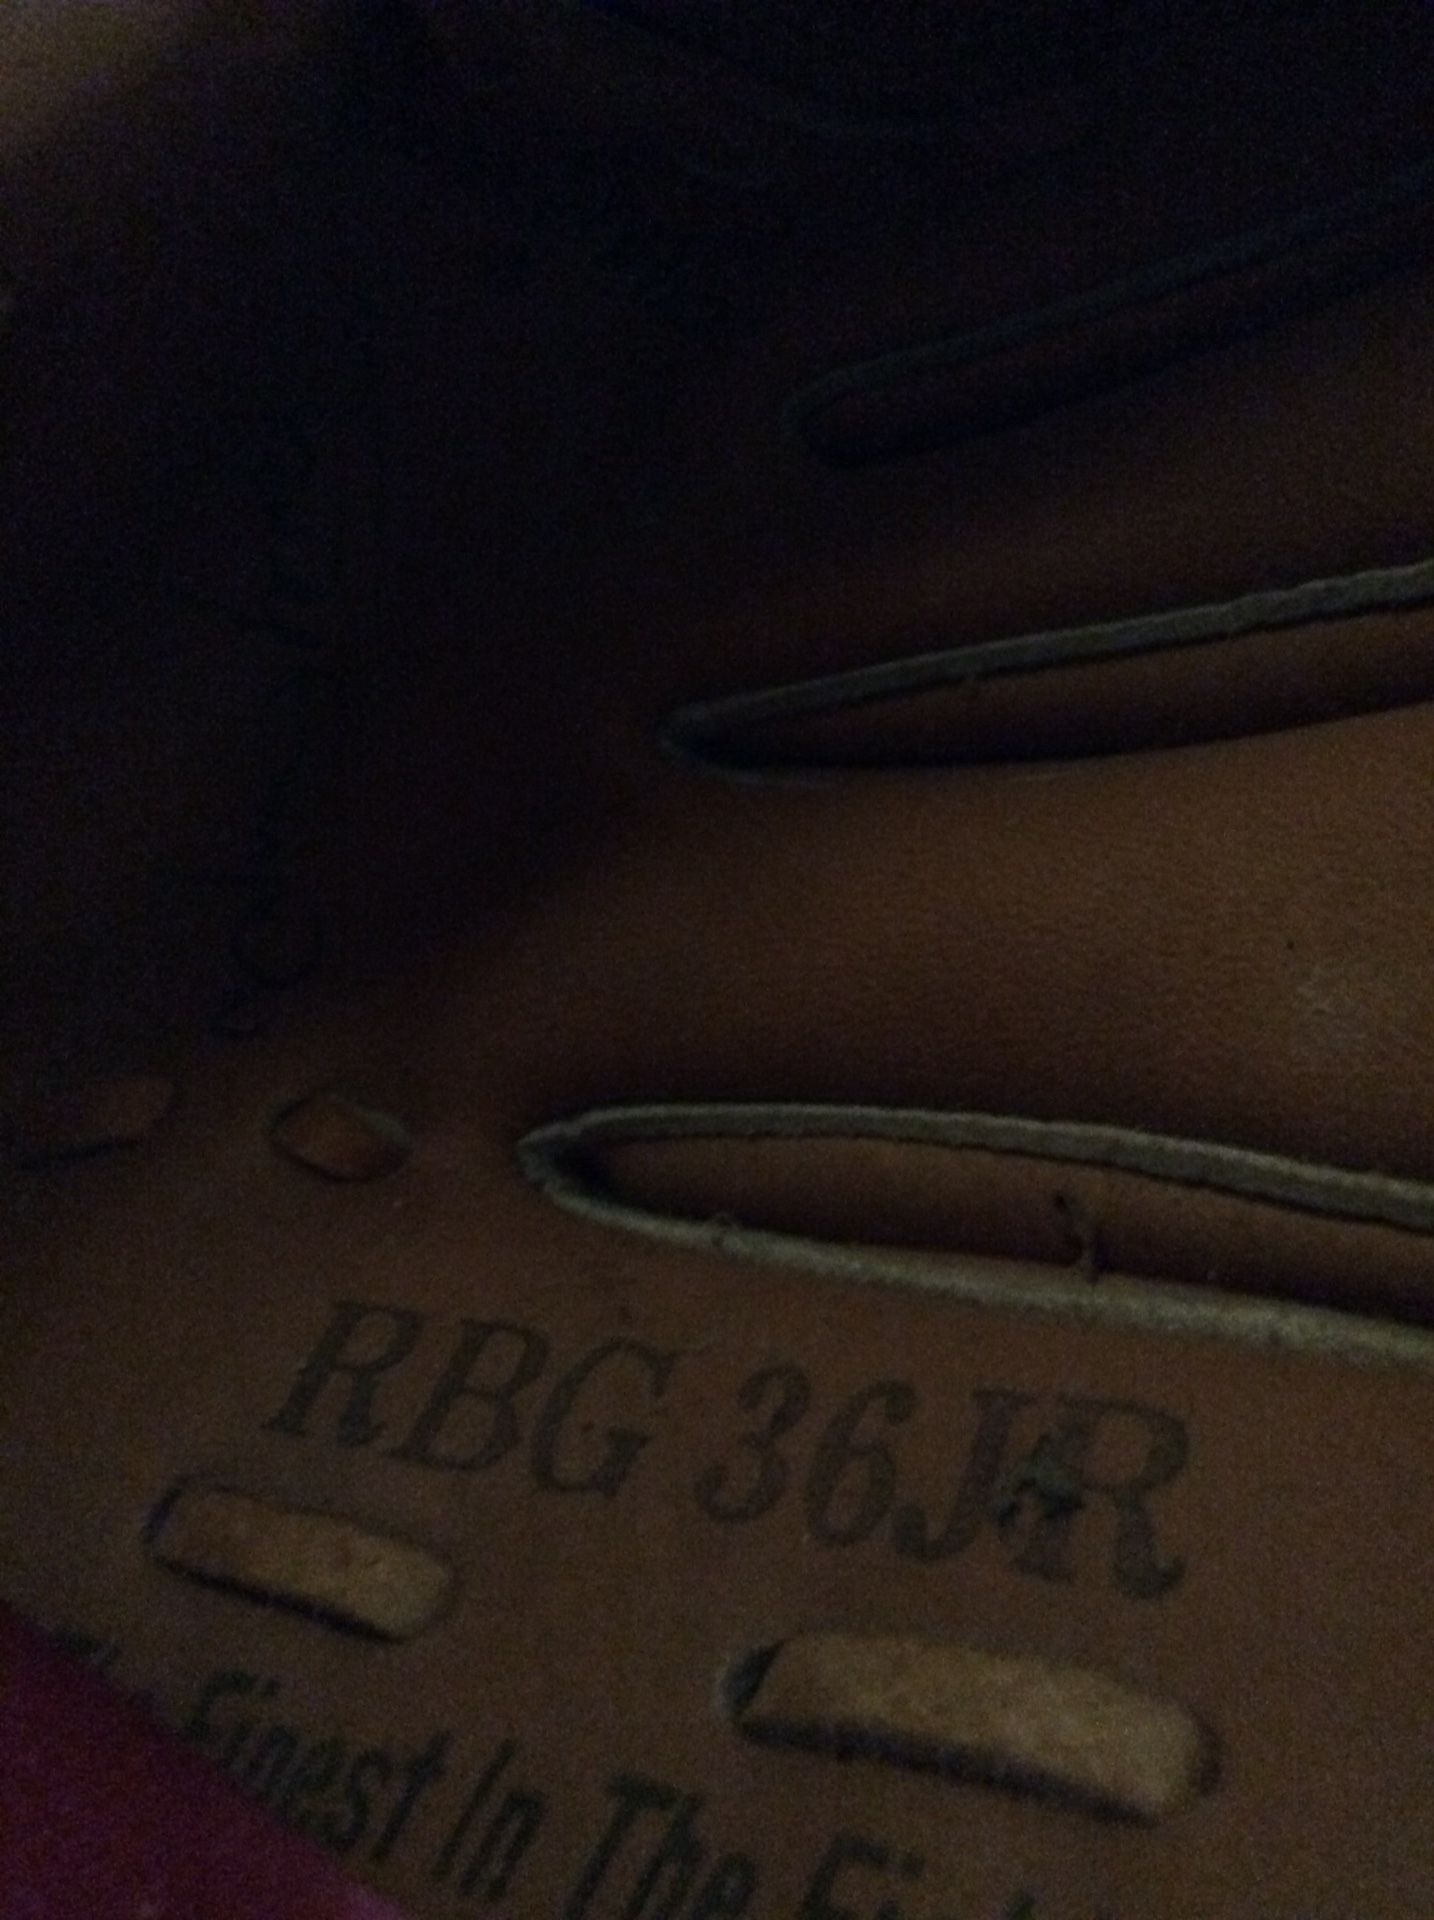 Rawlings RBG 36 JR. leather youth baseball glove